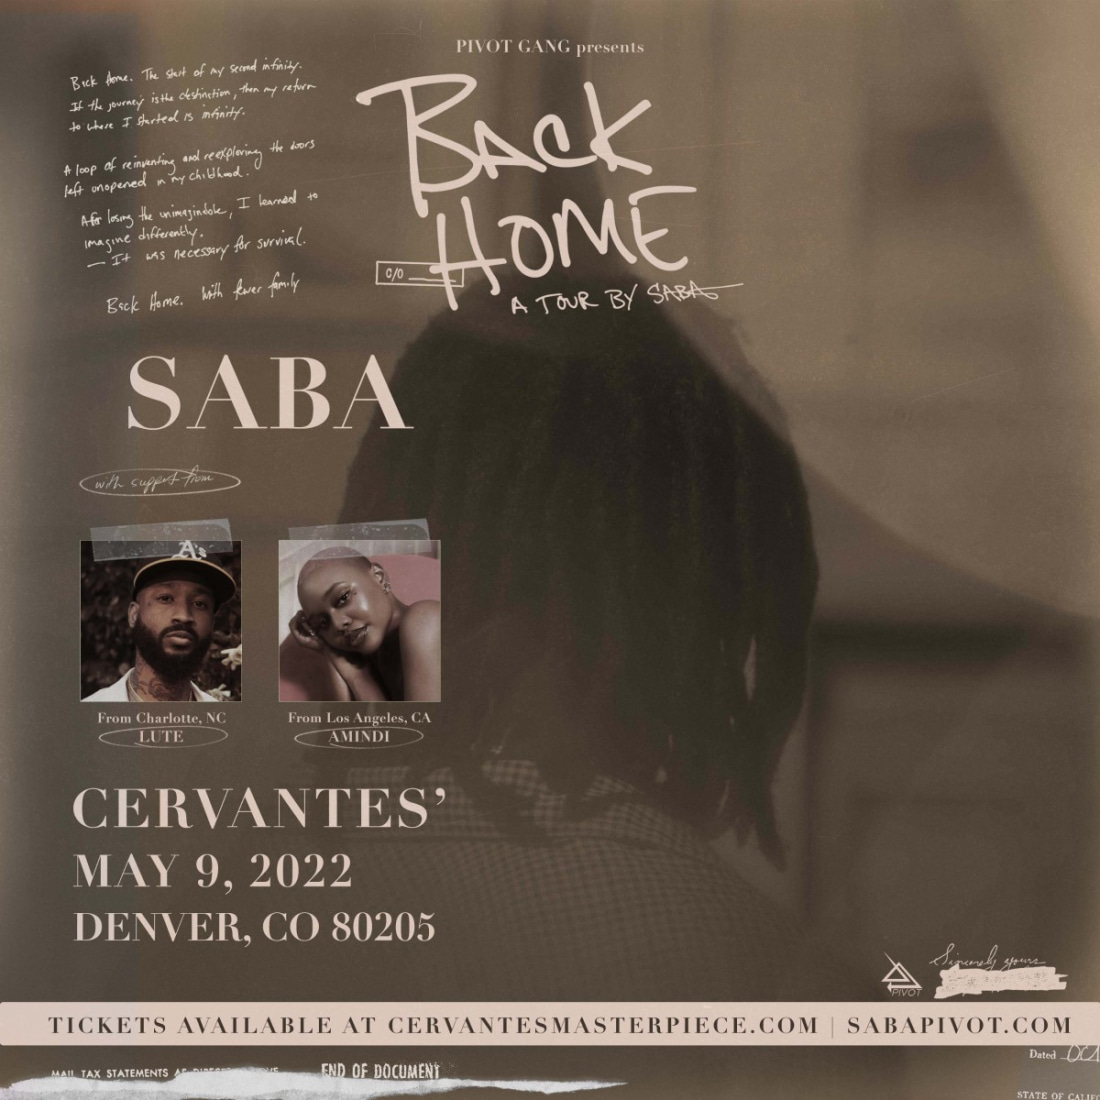 Saba - The Back Home Tour